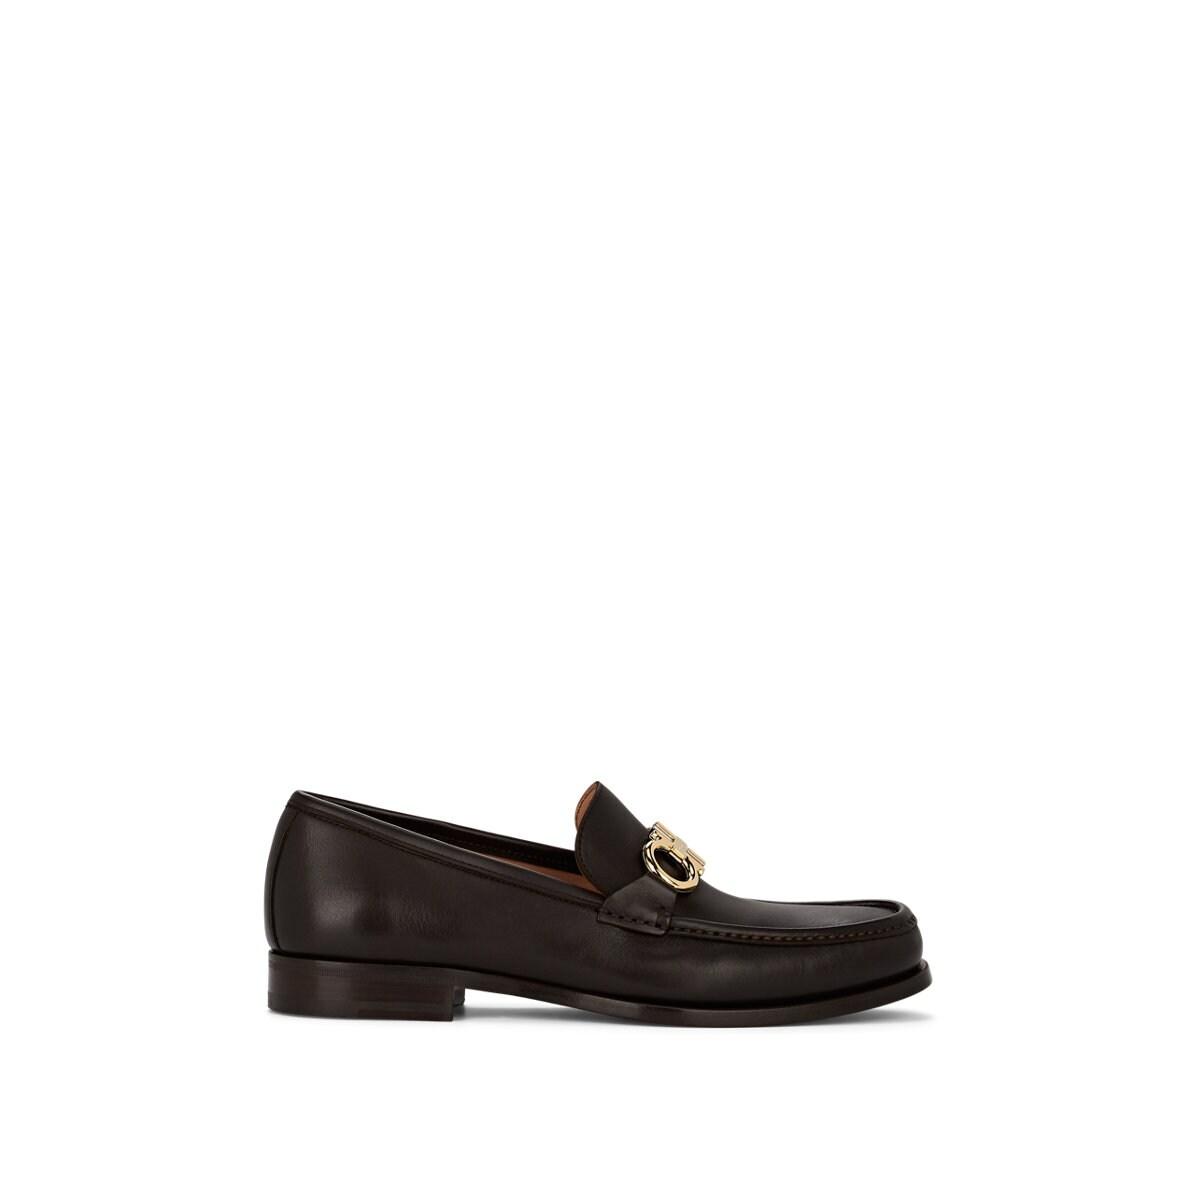 Ferragamo Rolo Bit-embellished Leather Loafers in Brown for Men - Lyst